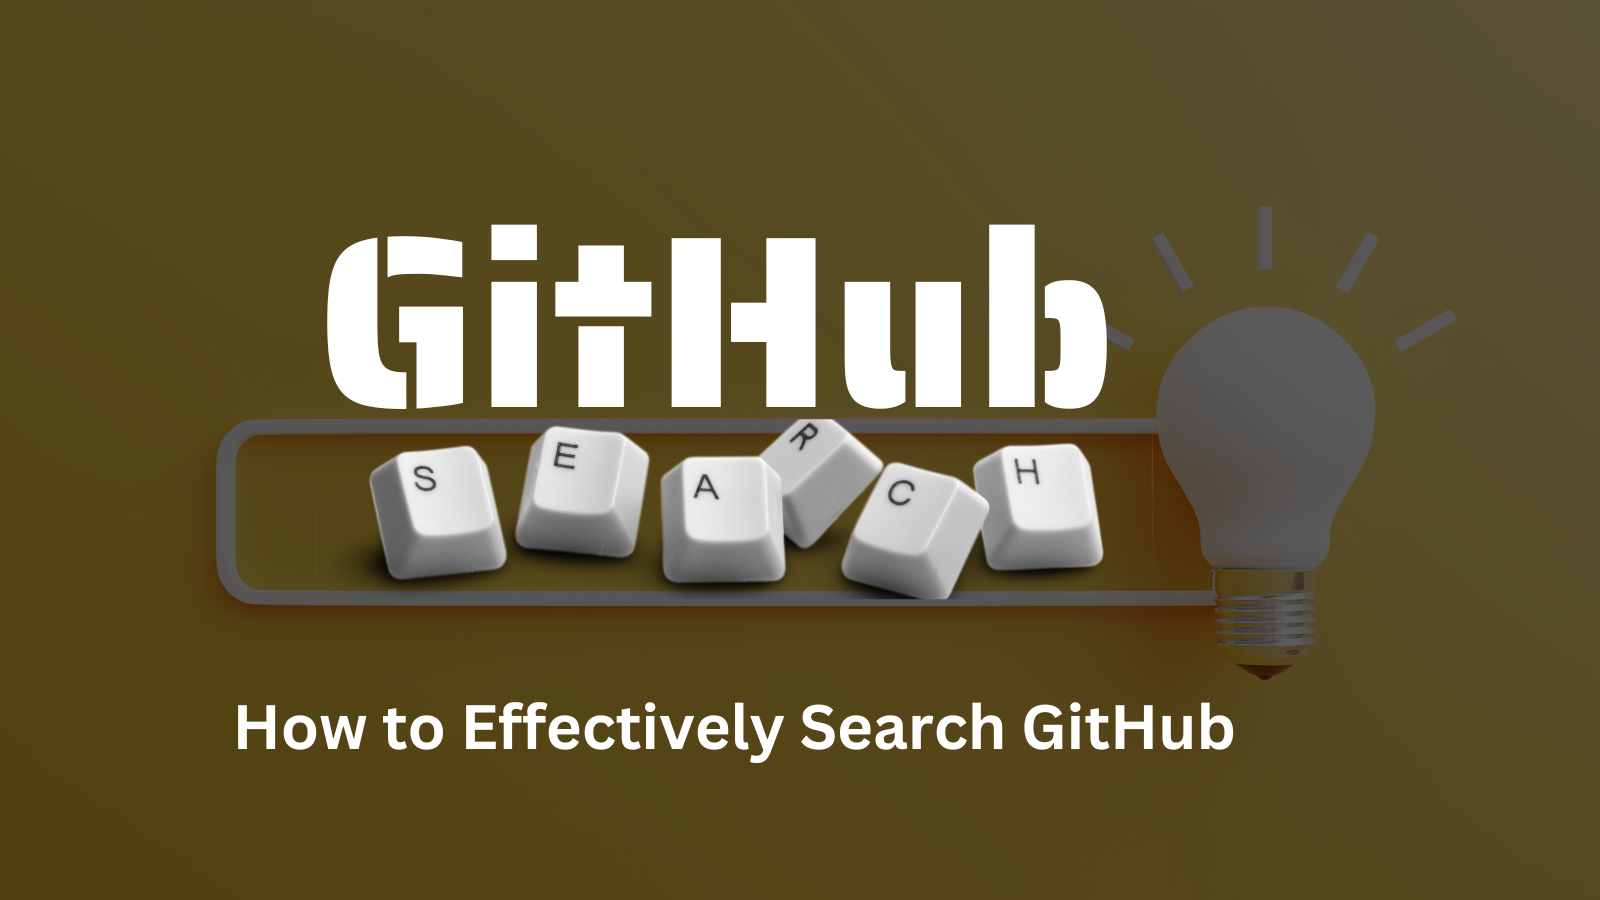 GitHub 搜索技巧——如何在 GitHub 上更有效地搜索 issue、repo 和更多信息